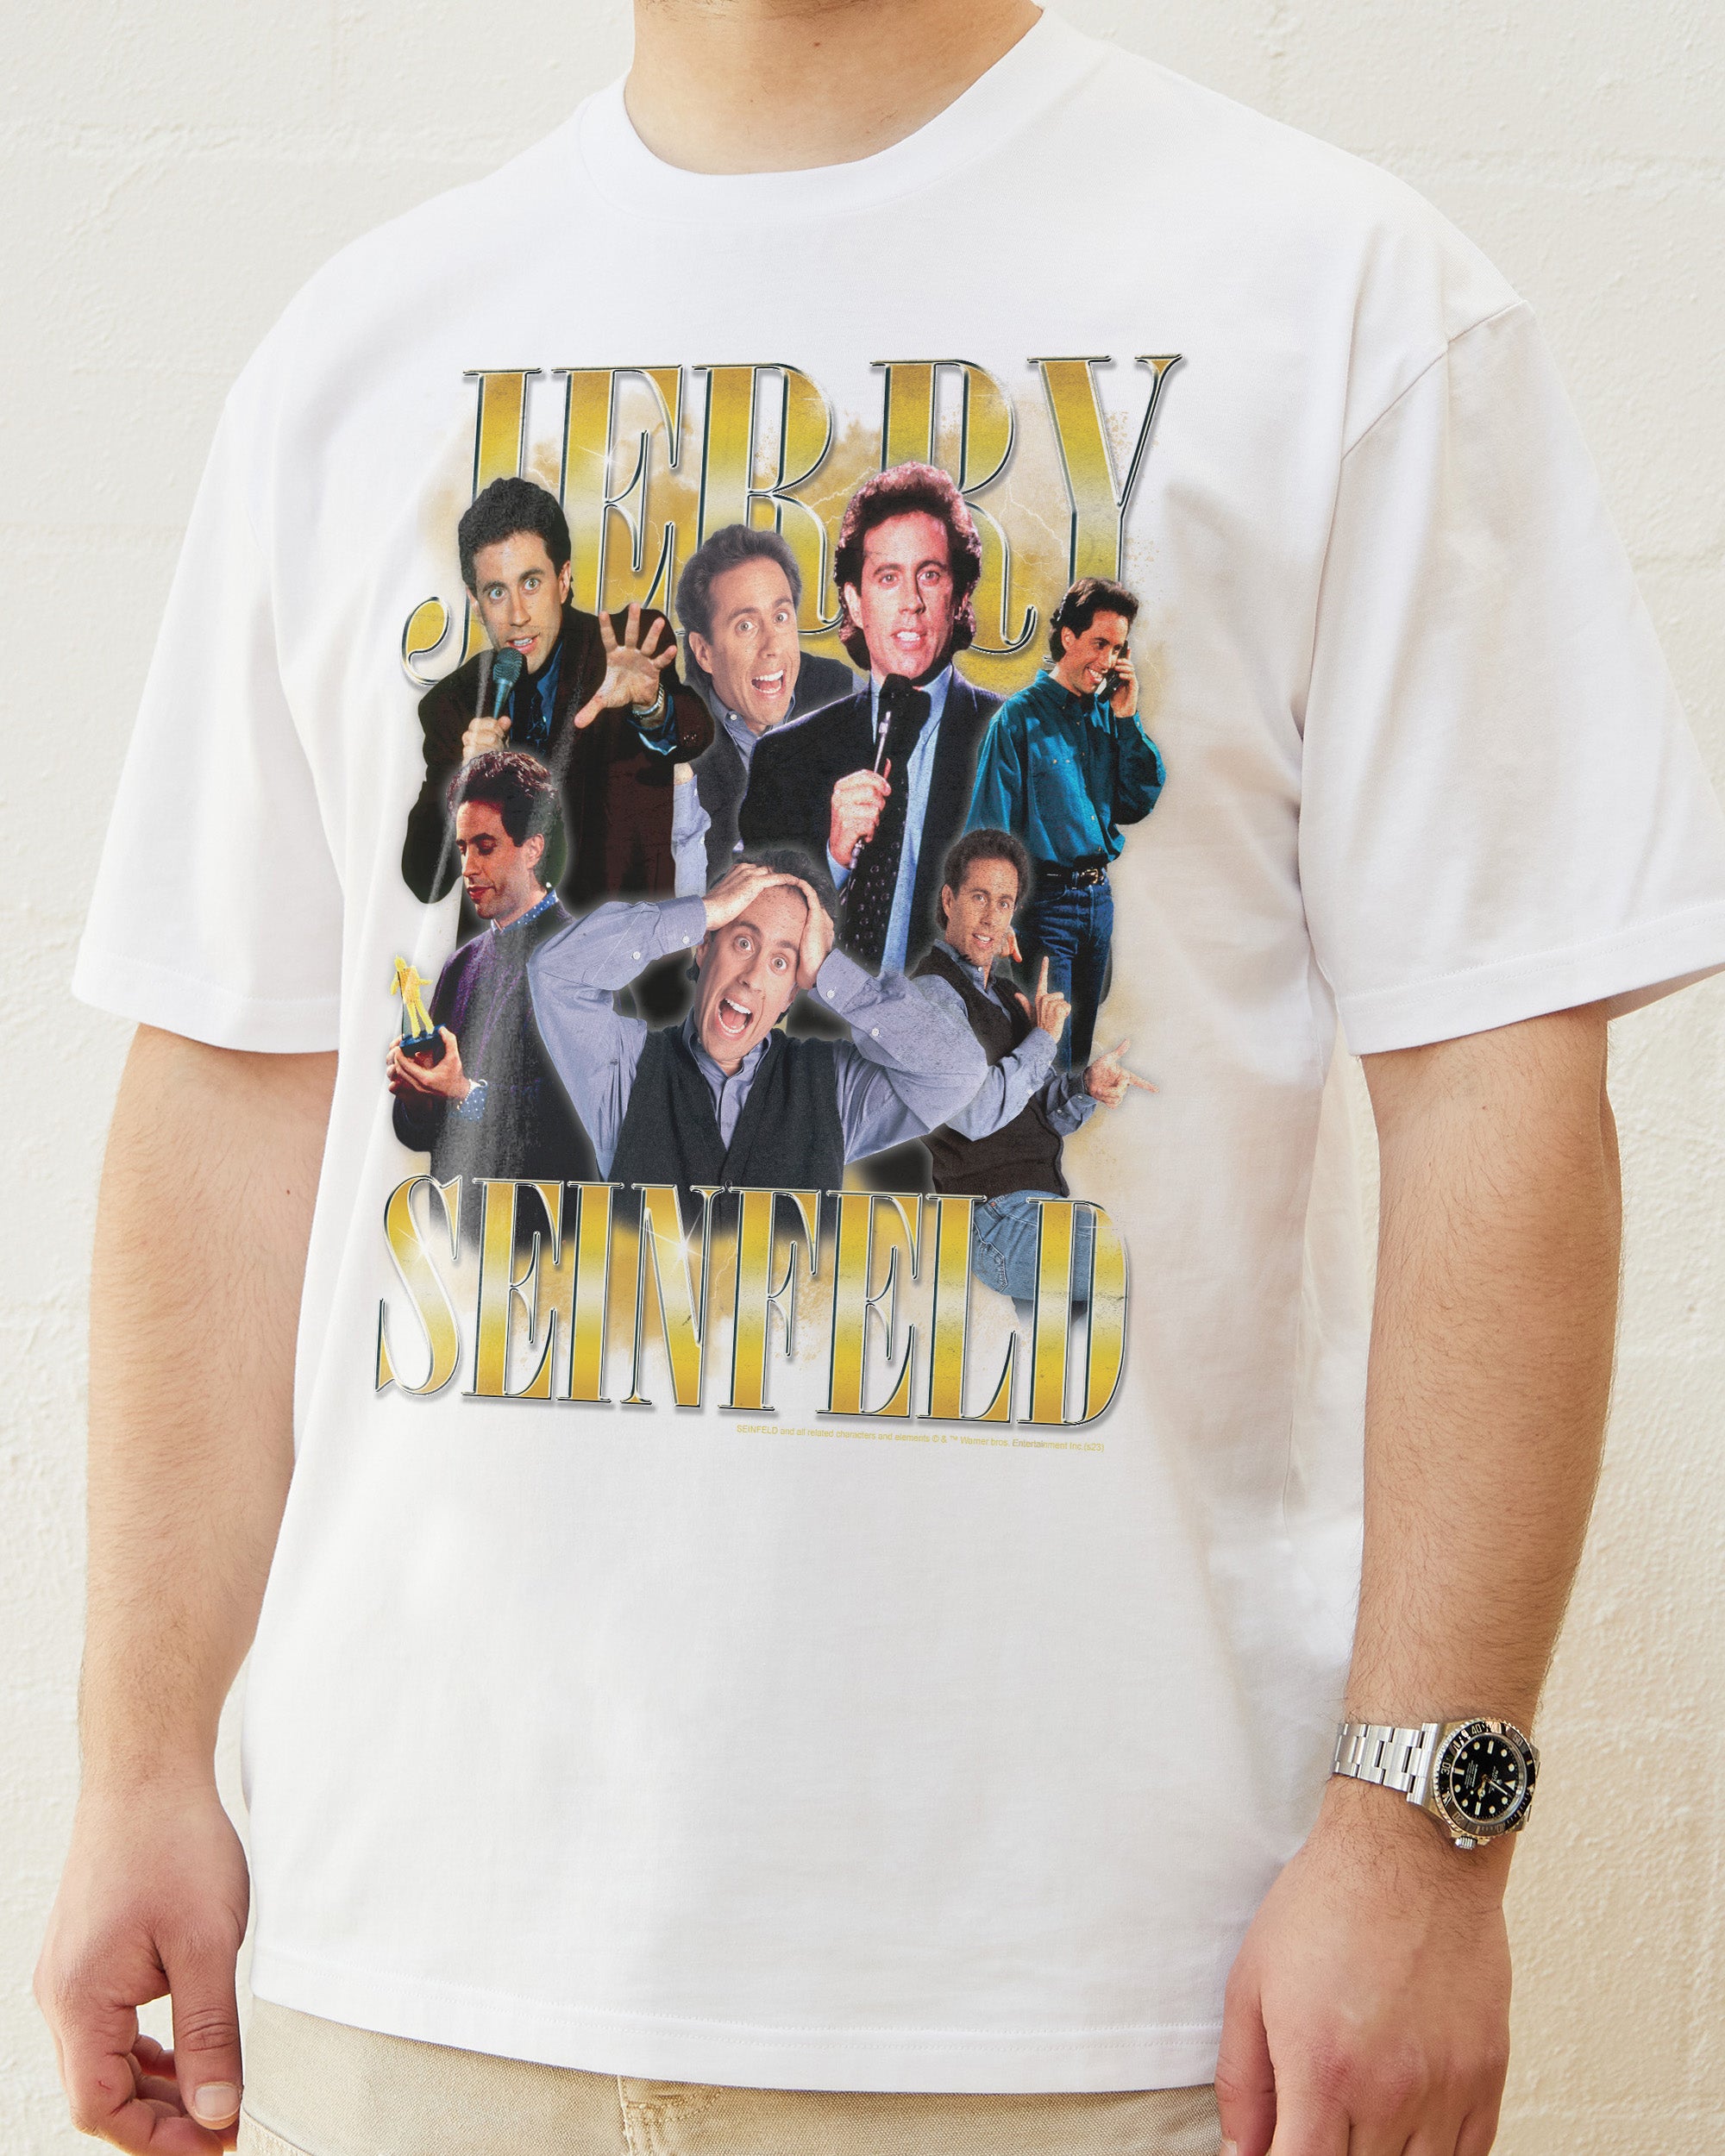 Vintage Jerry T-Shirt